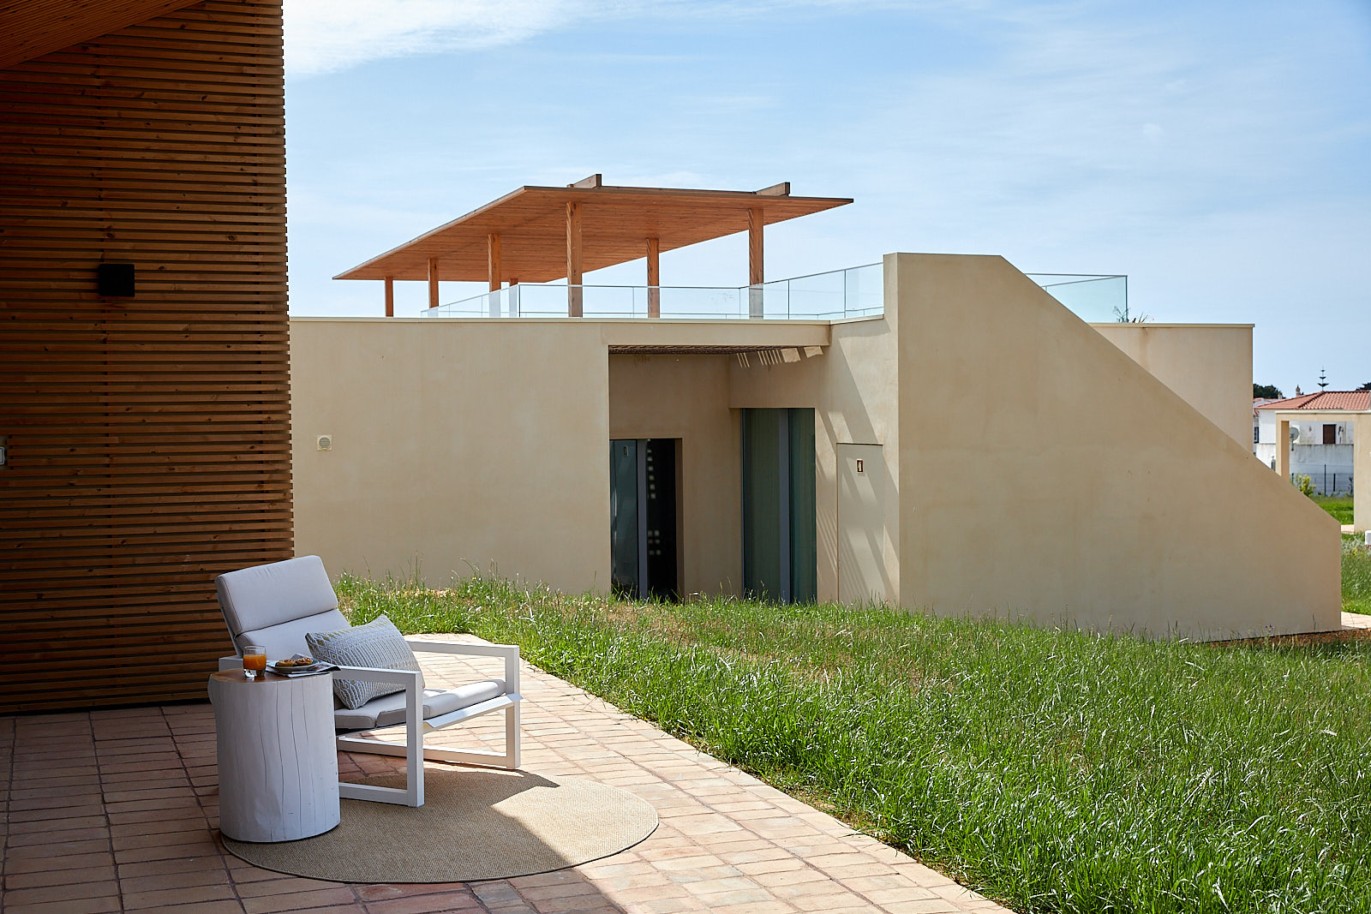 2 bedroom apartment in resort, for sale in Porches, Algarve_229105